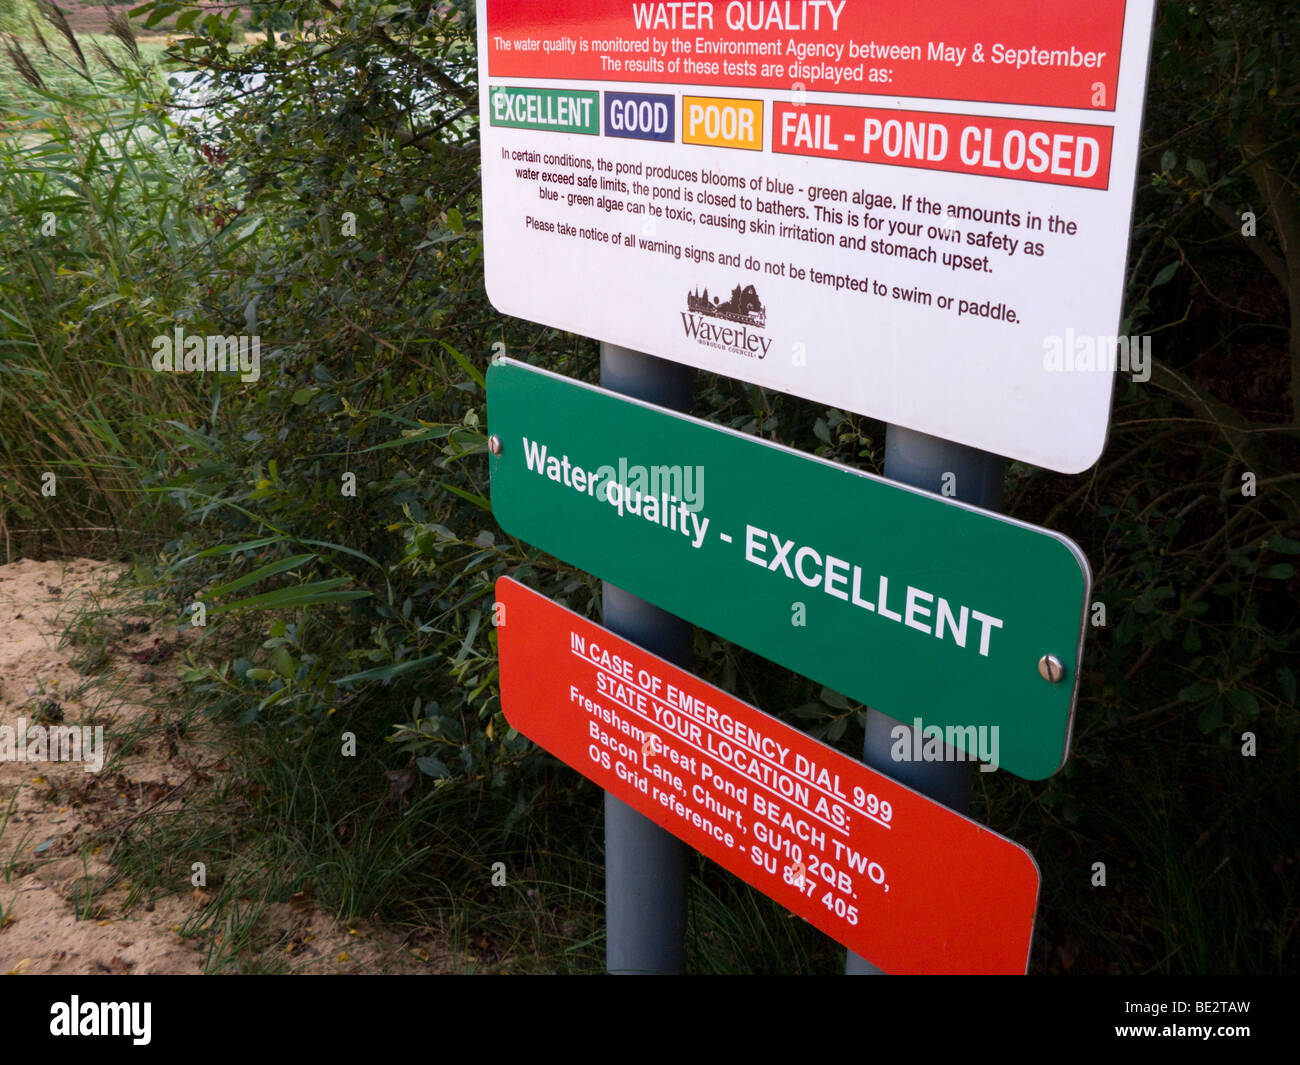 Water quality signs at Frensham Great Pond. Bacon Lane, Churt, Near Farnham, Surrey. UK. Stock Photo